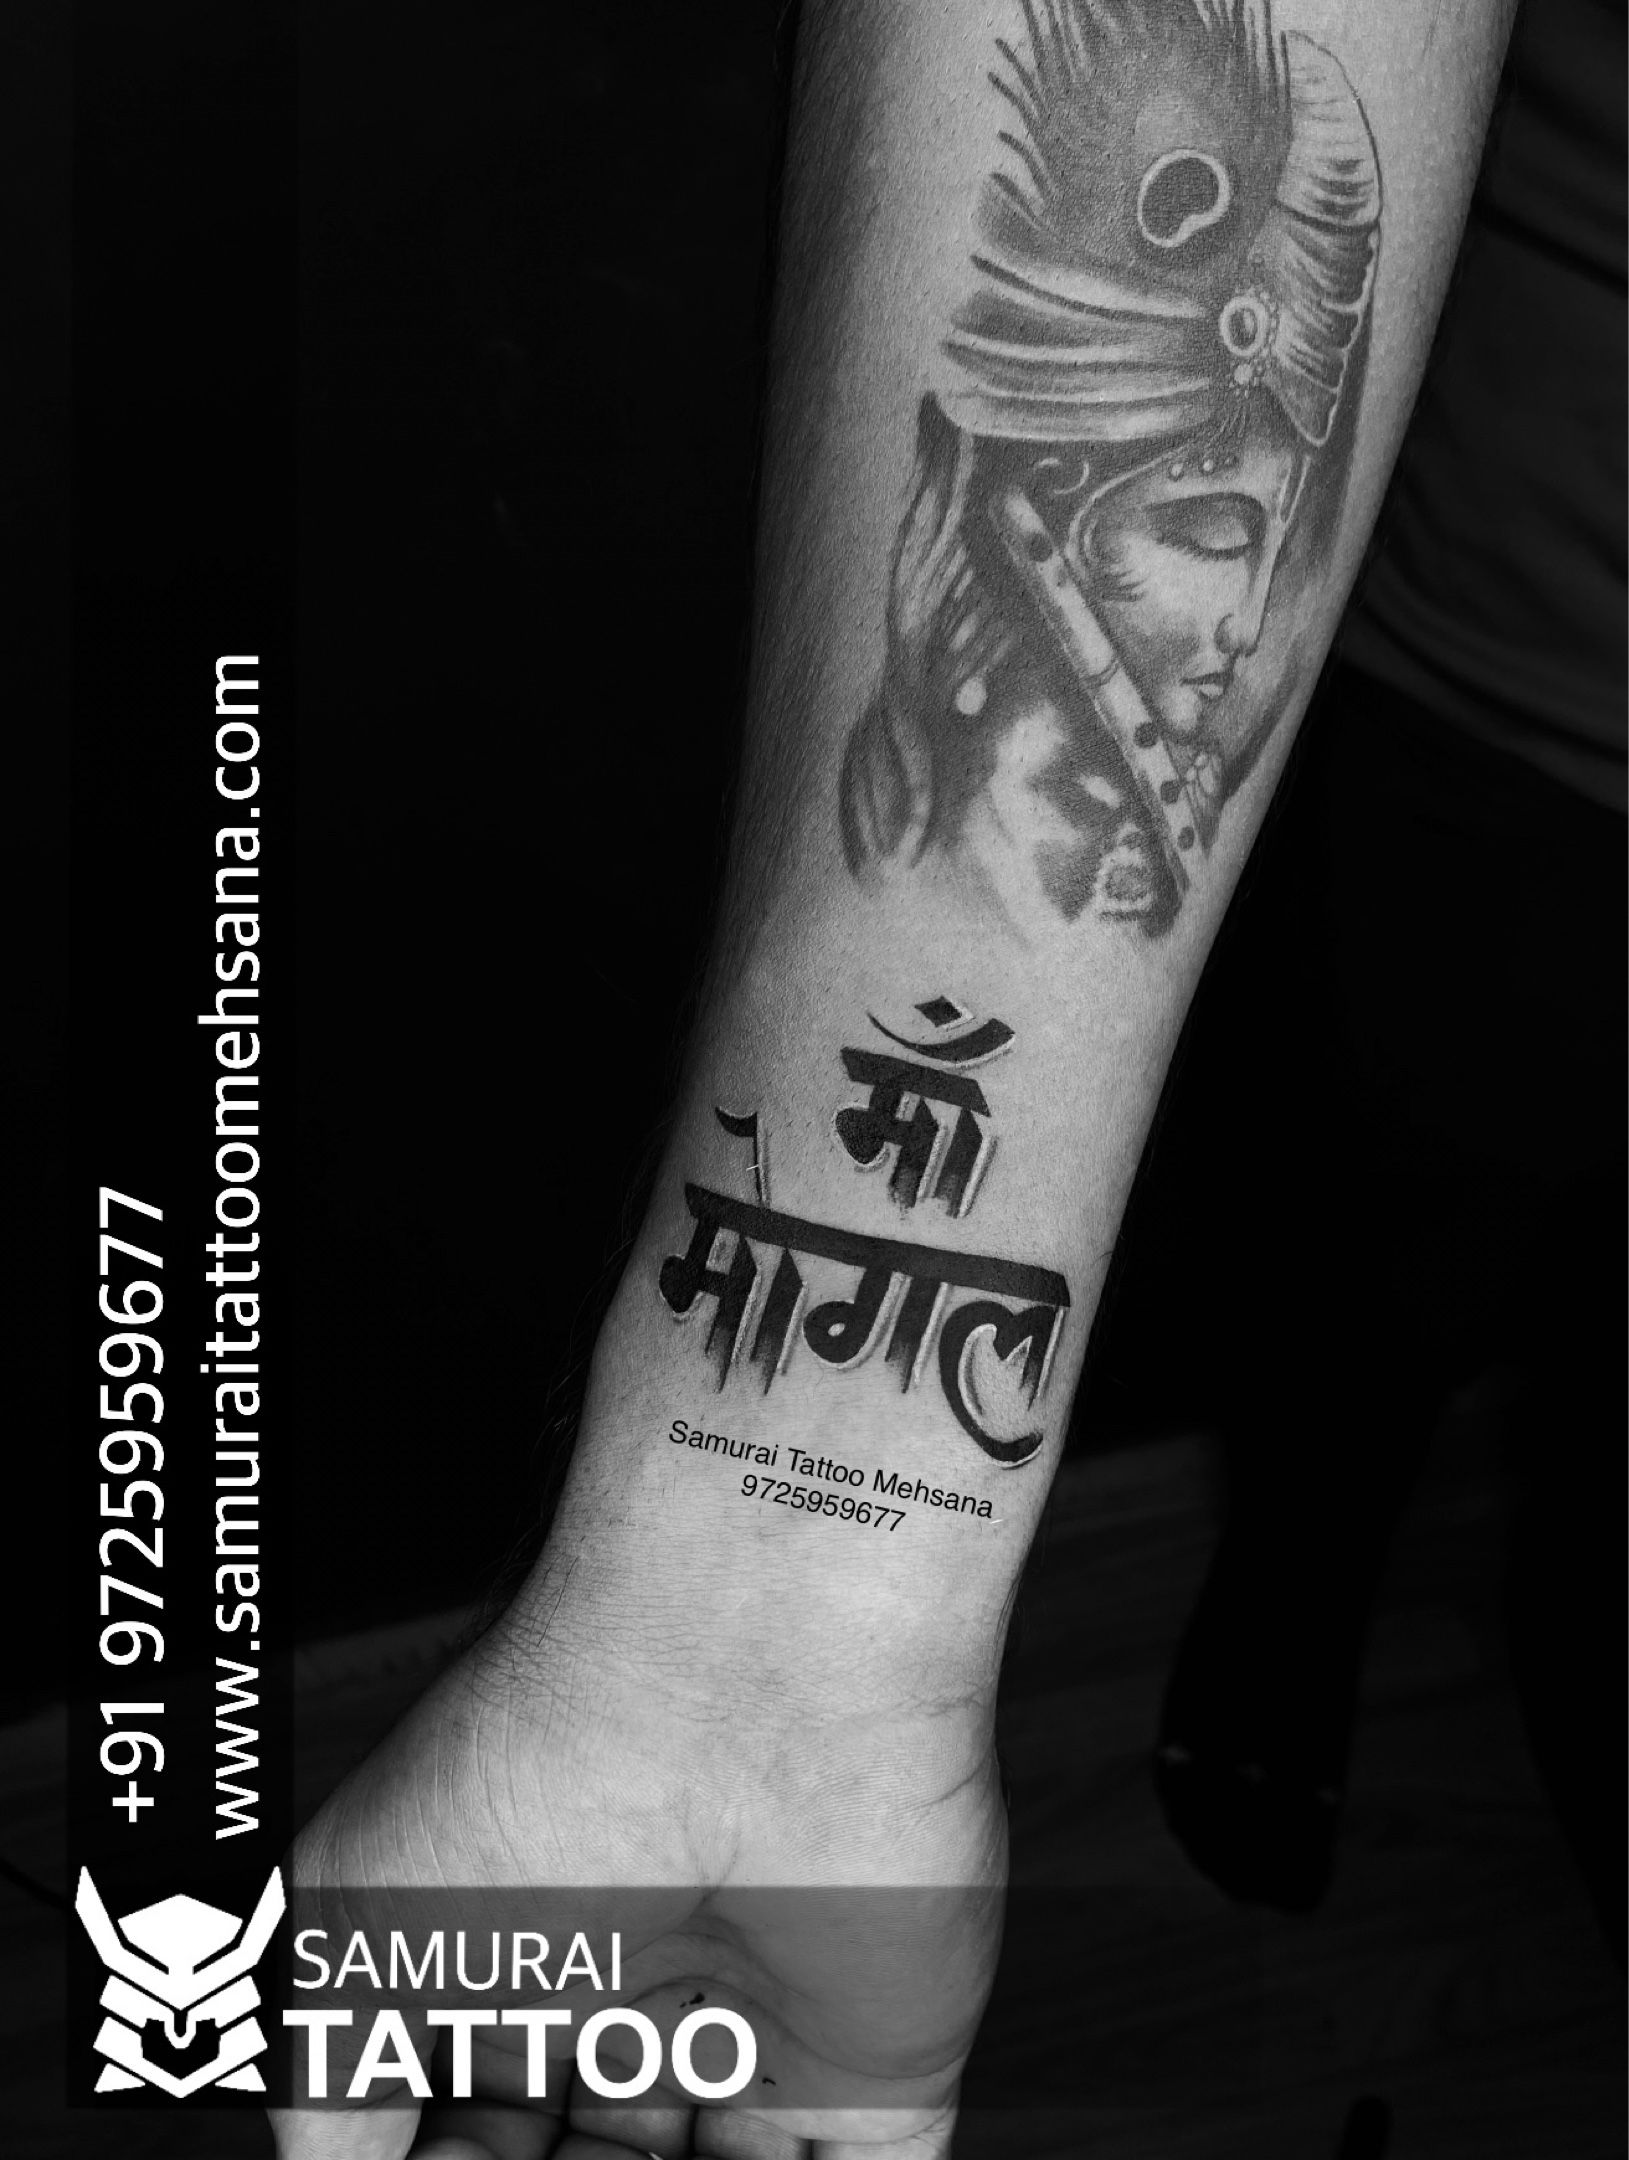 Tattoo uploaded by Samurai Tattoo mehsana  Band tattoo Band tattoo design  Band tattoo ideas mogal maa tattoo Maa Mogal tattoo Mogal mataji nu  tattoo  Tattoodo